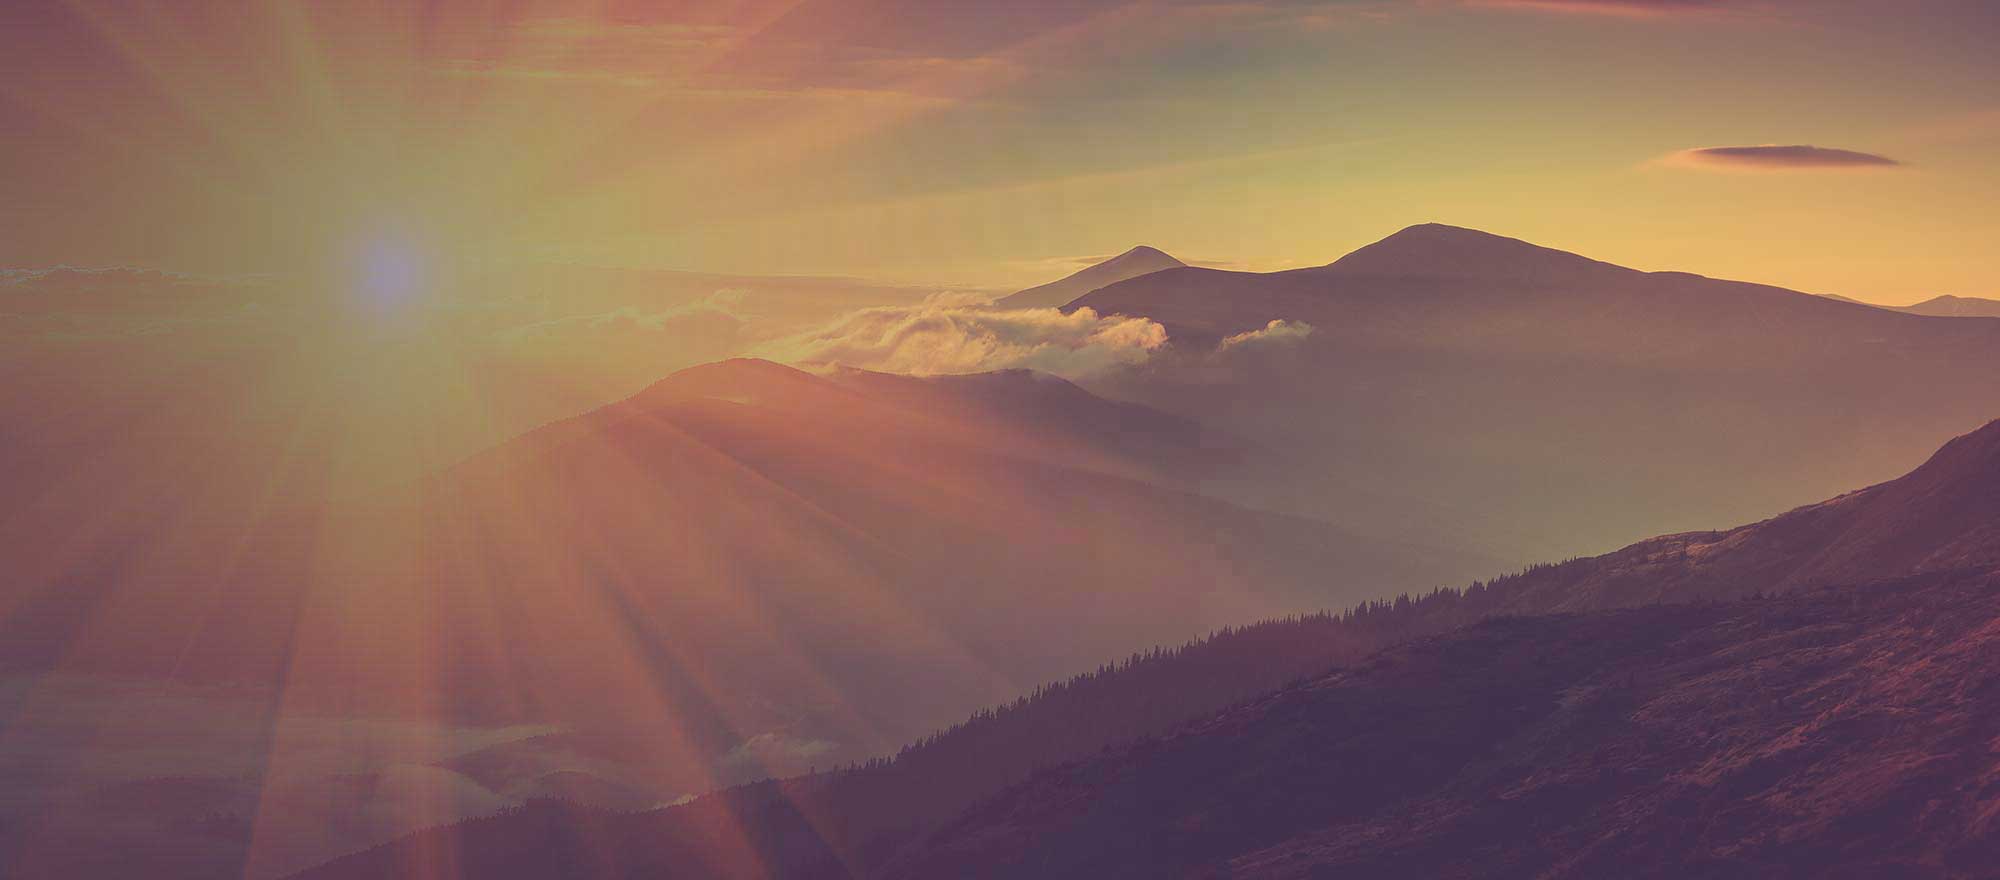 sun setting over a mountain